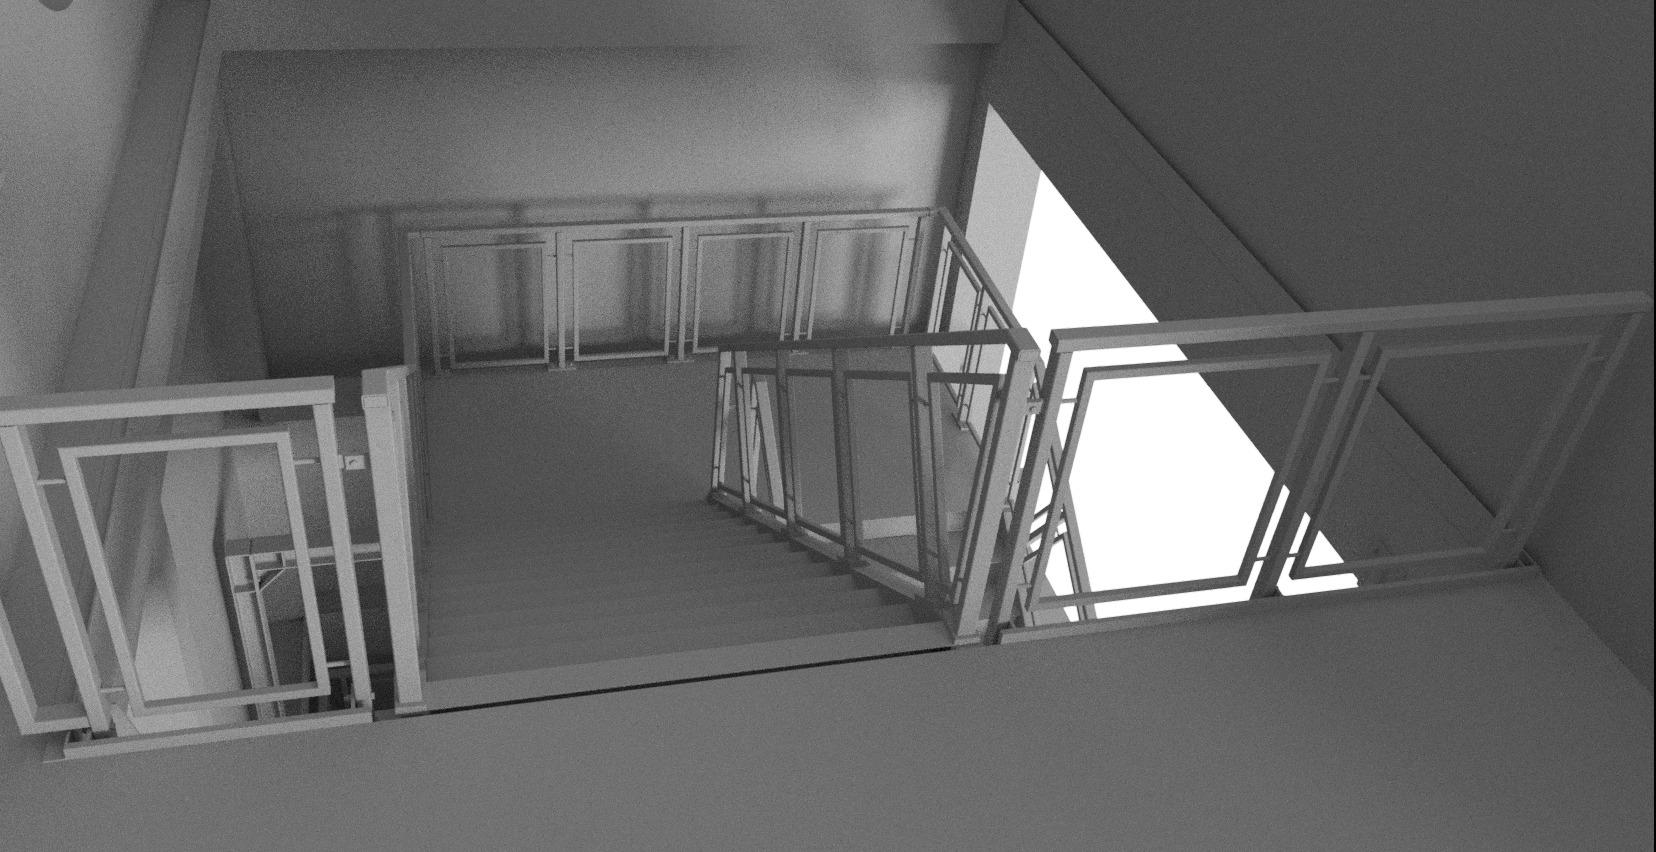 CADPROM Konstruktionsbüro in Neuss: Hochwertige Stahltreppen